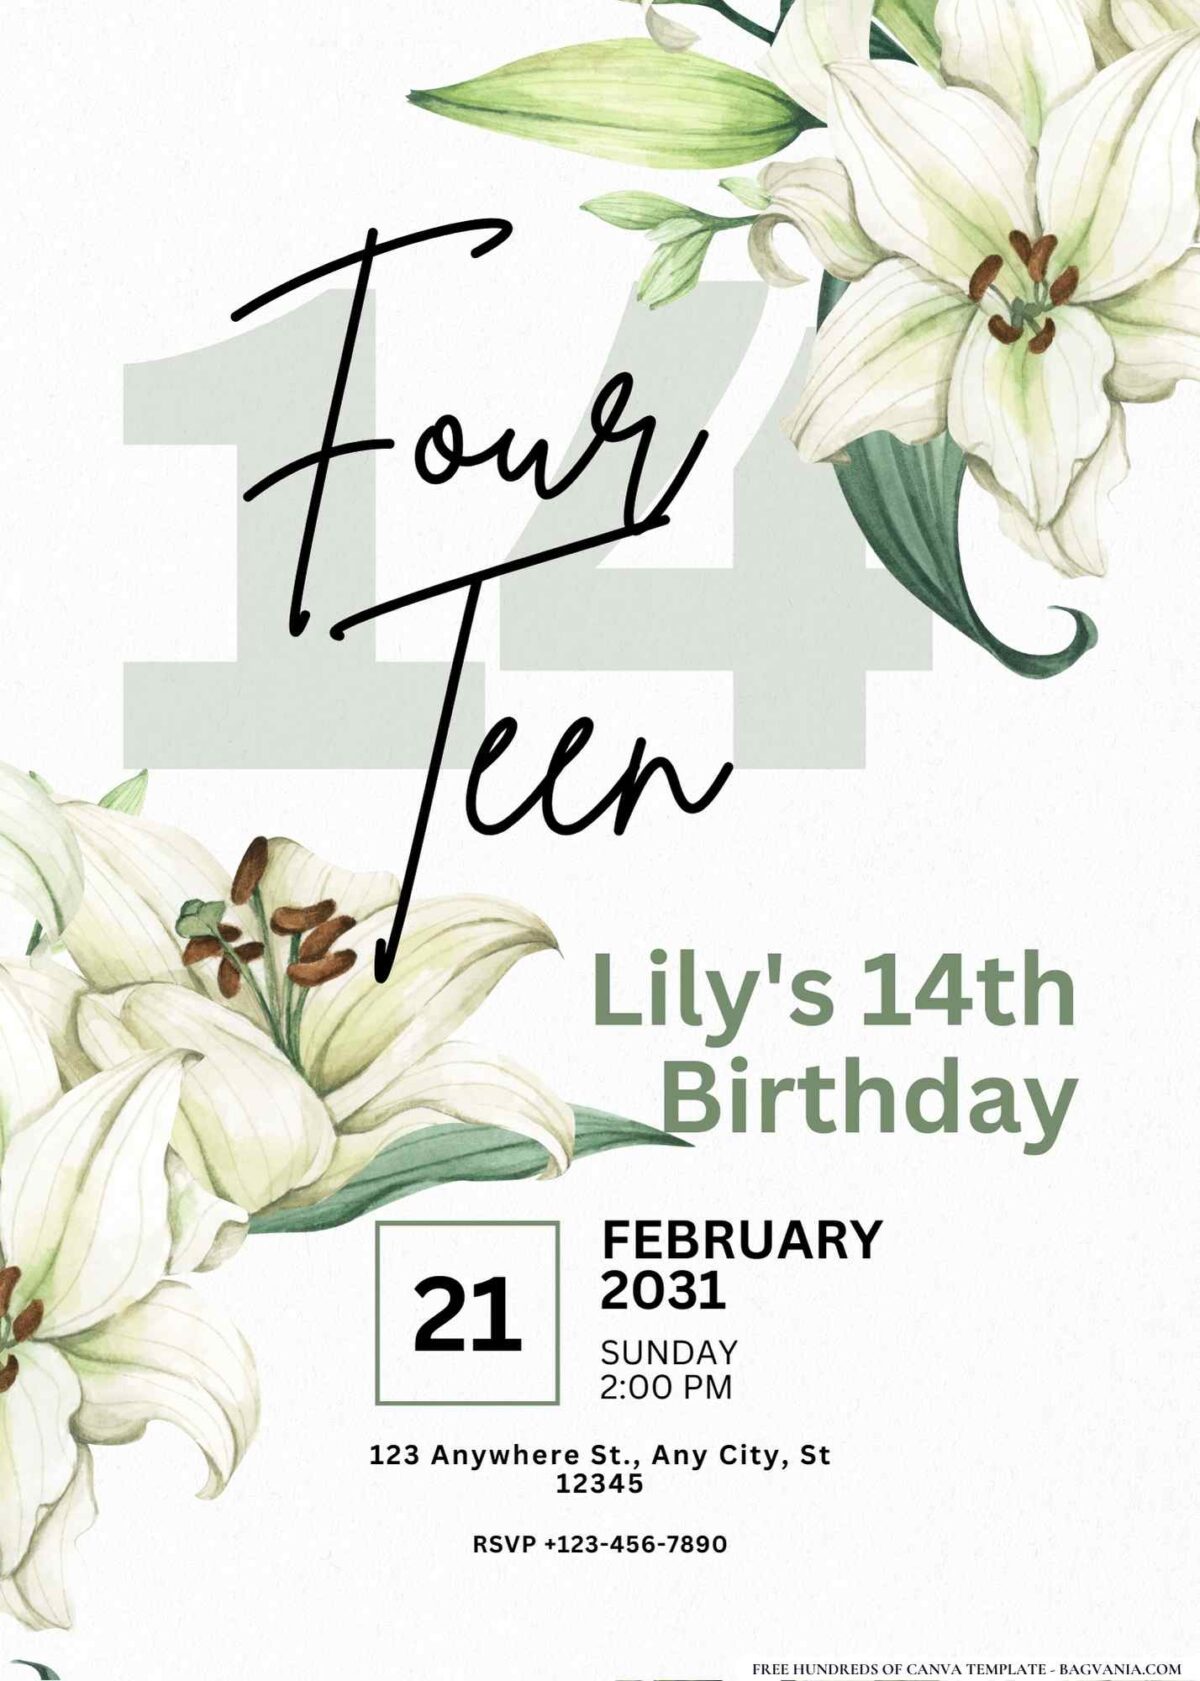 FREE Editable Watercolor Lily Bouquet Birthday Invitation